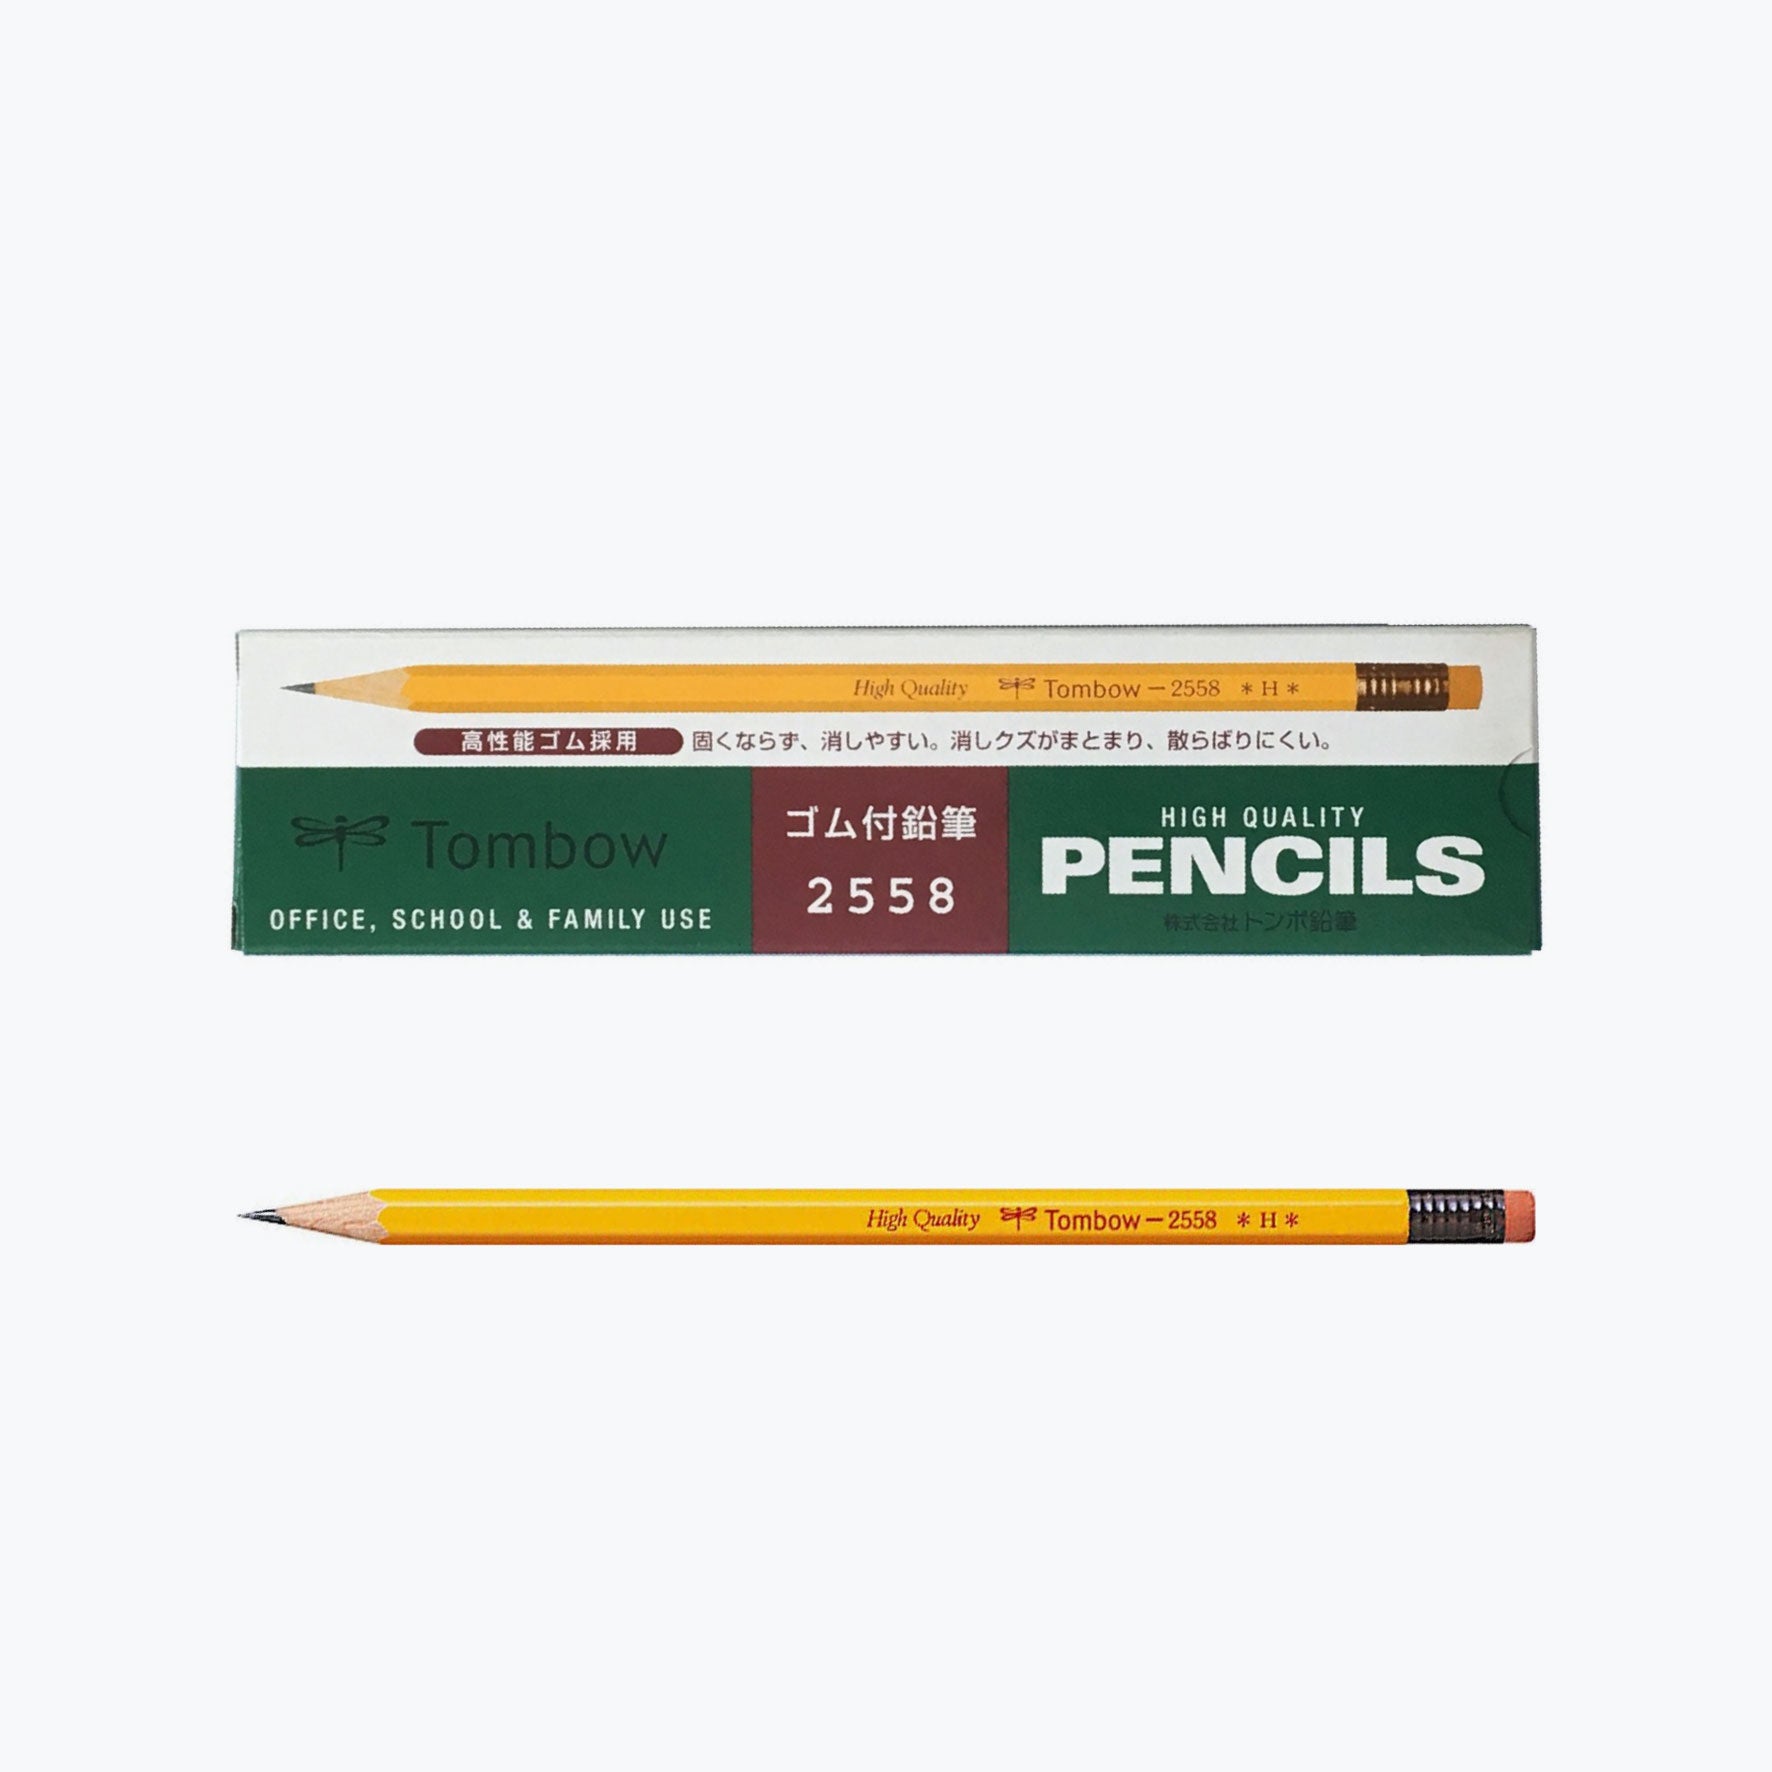 Tombow - Pencil - 2558 (Various Grades) - Box of 12